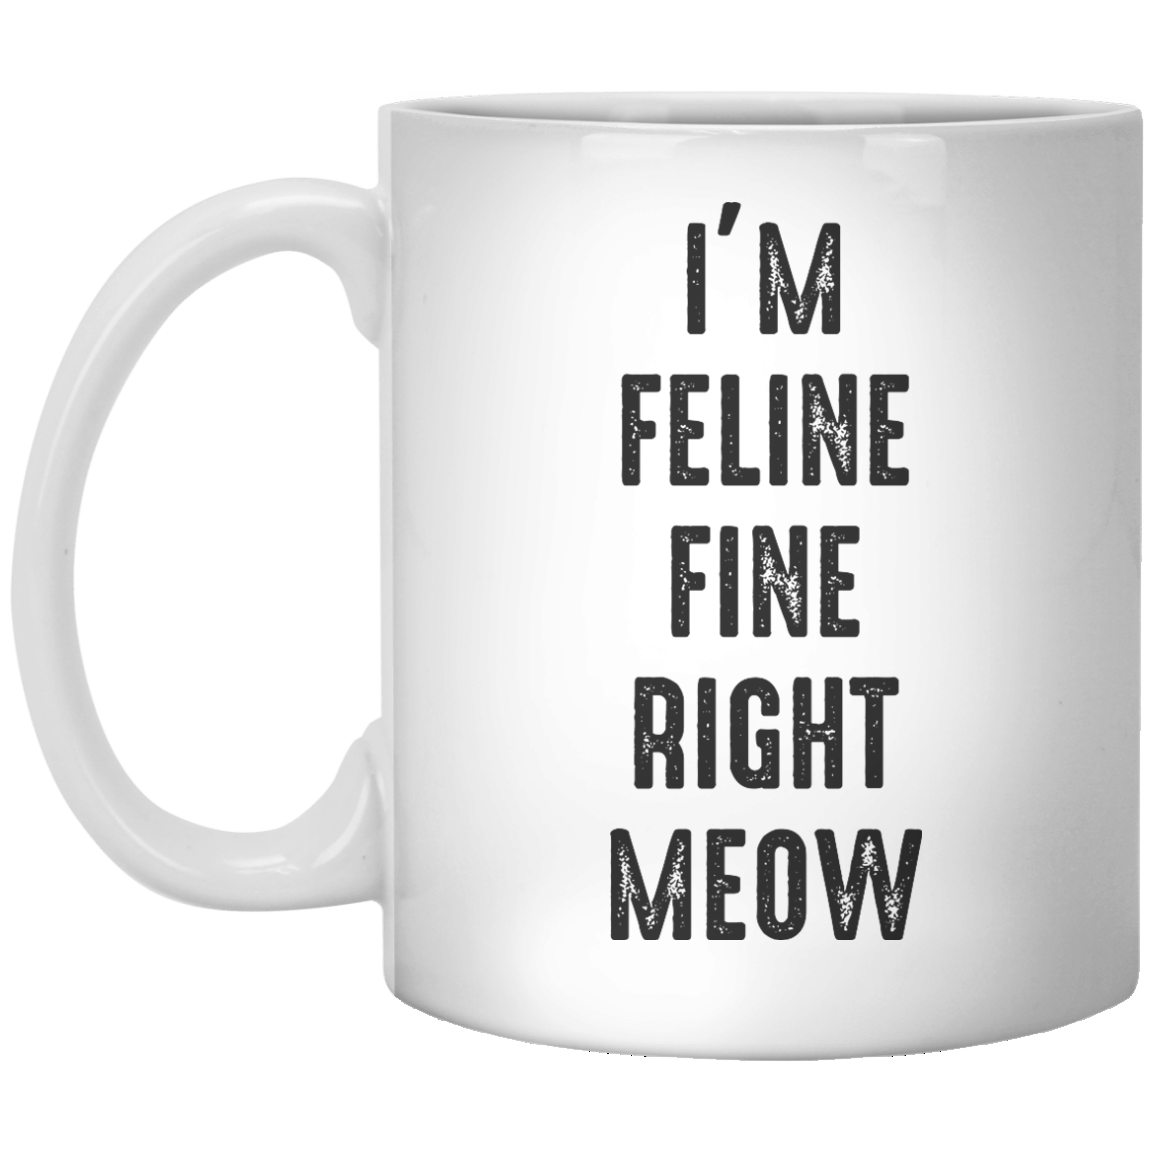 I’m Feline Fine Right Meow MUG - Shirtoopia